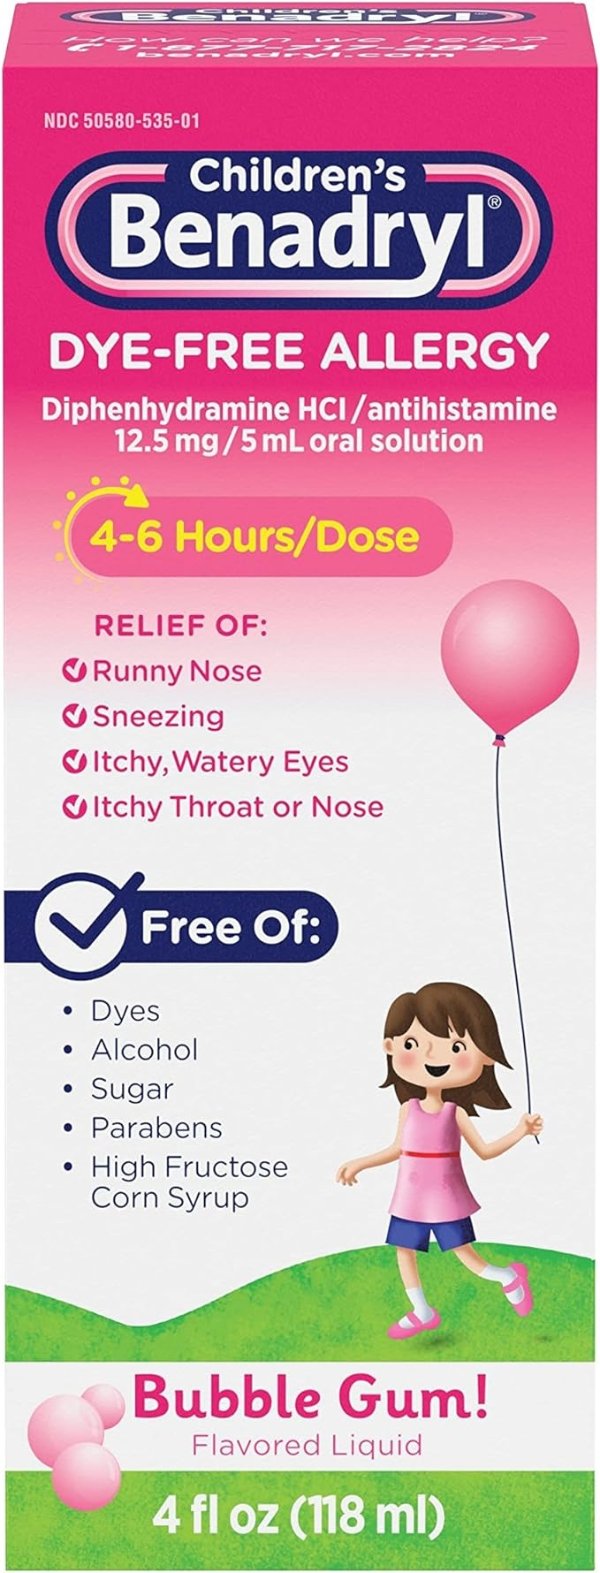 Children’s Benadryl Antihistamine Allergy Relief, Dye-Free Liquid, Bubble Gum Flavored, 4 Oz